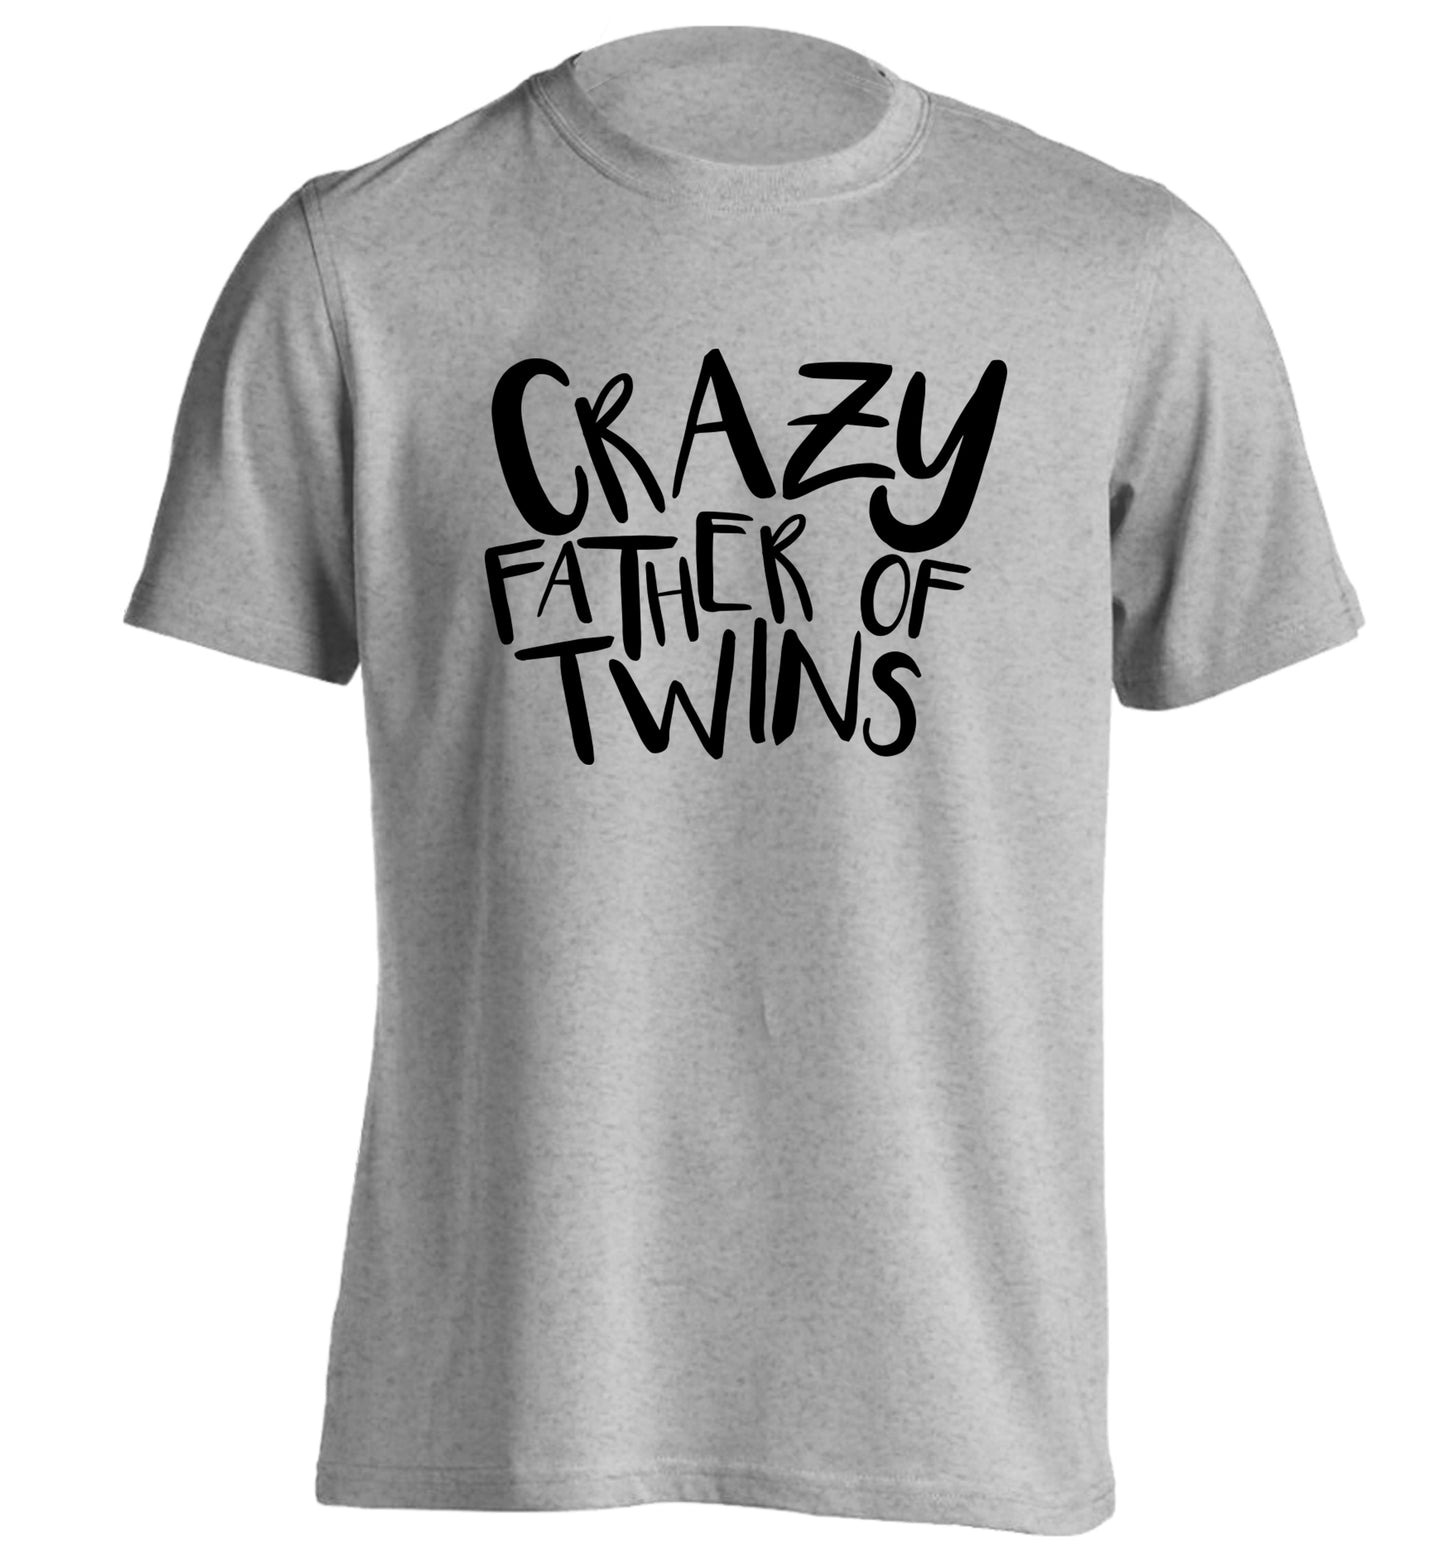 Crazy father of twins adults unisex grey Tshirt 2XL